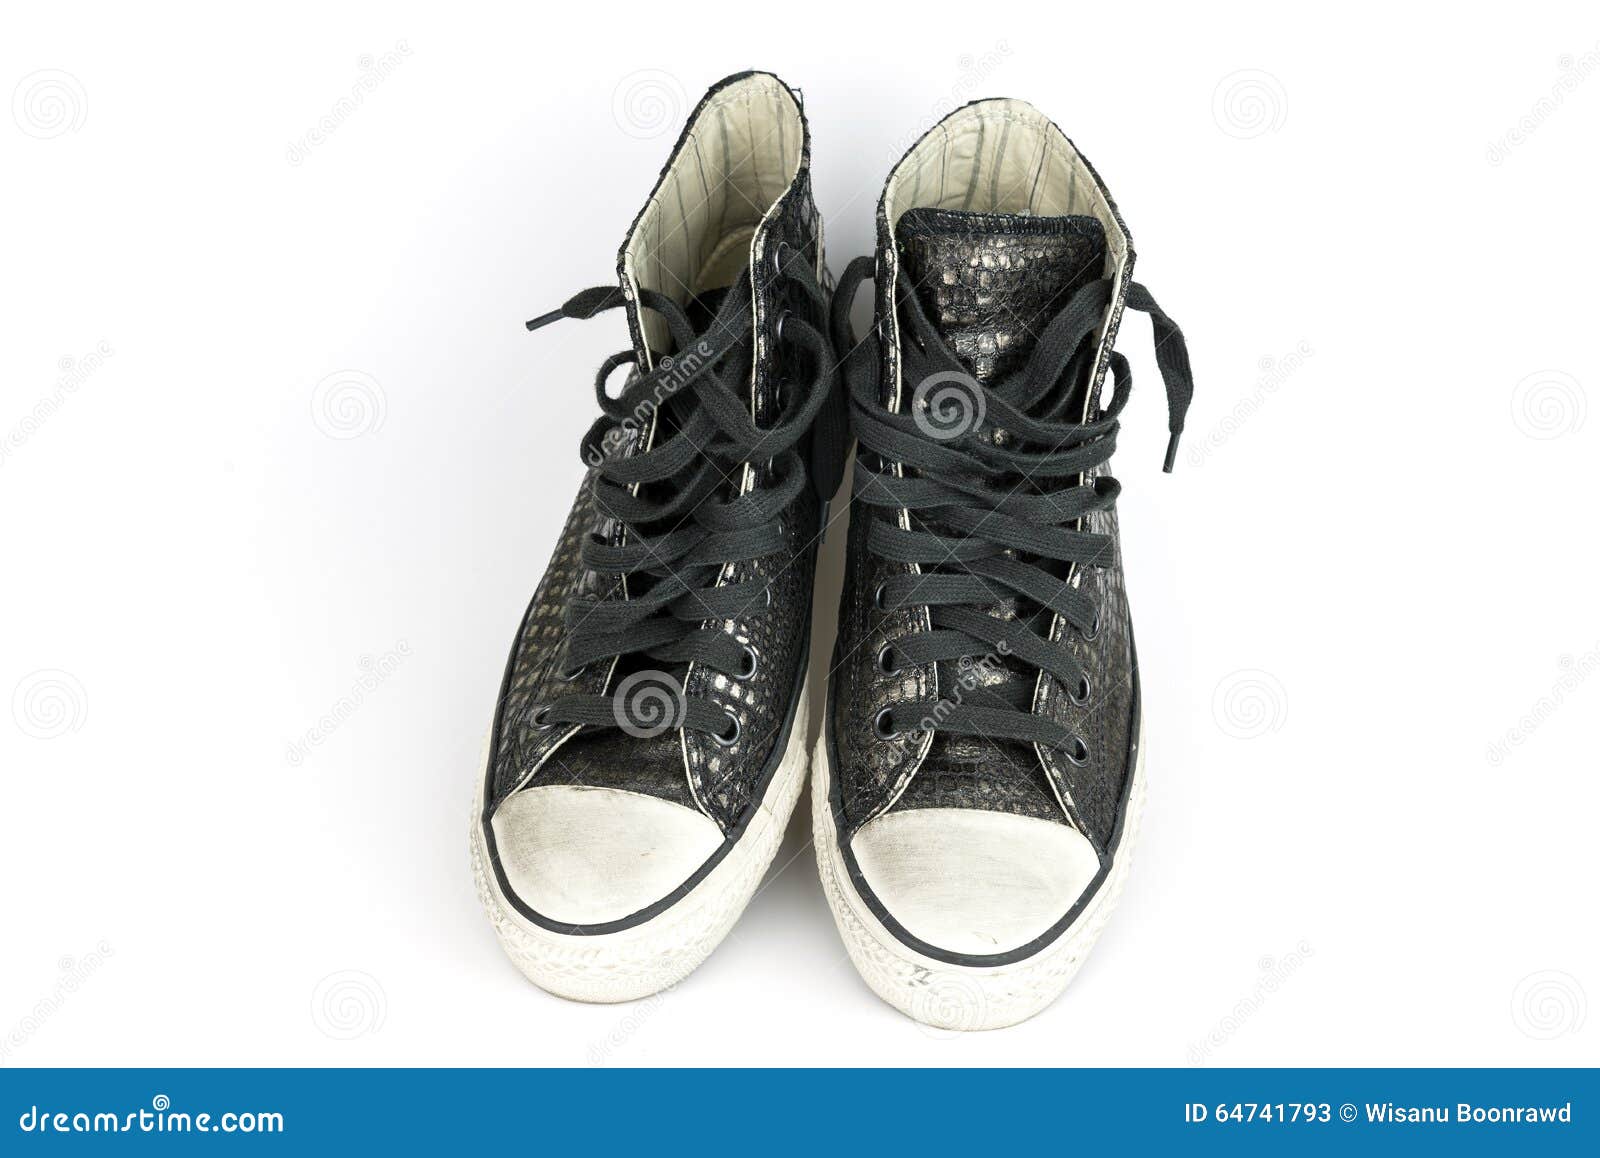 Black Vintage Shoes Crocodile Leather, Boots Stock Image - Image of ...